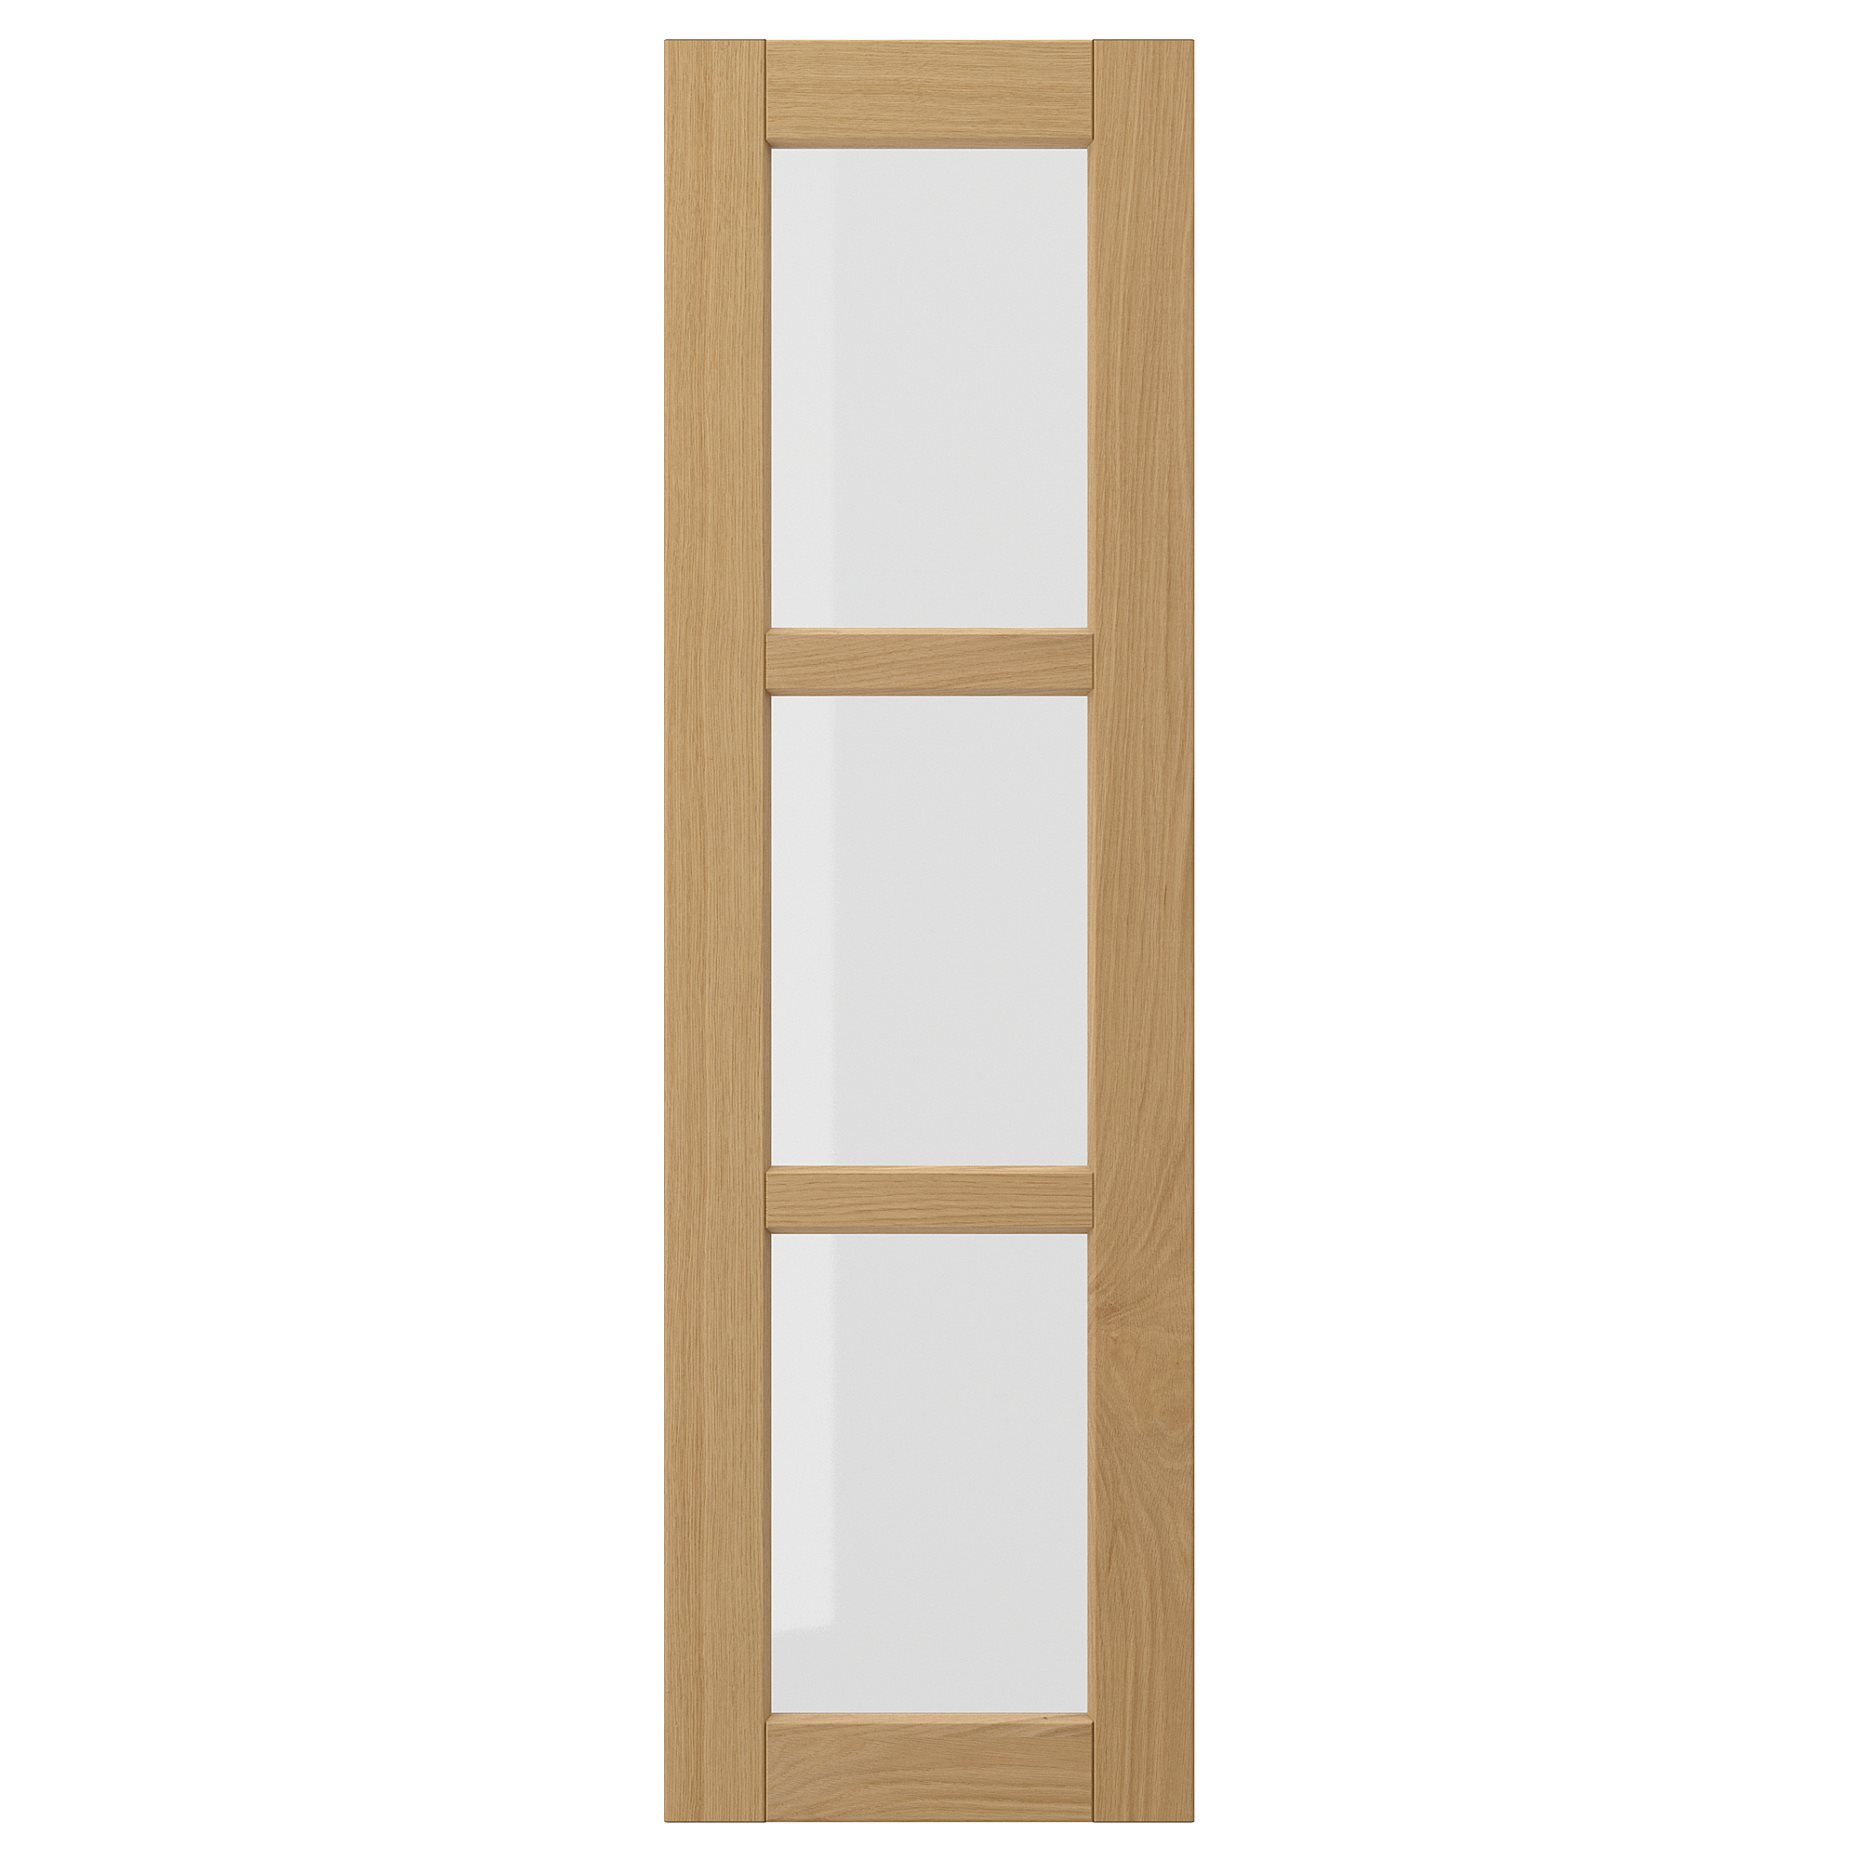 FORSBACKA, γυάλινη πόρτα, 30x100 cm, 205.652.53